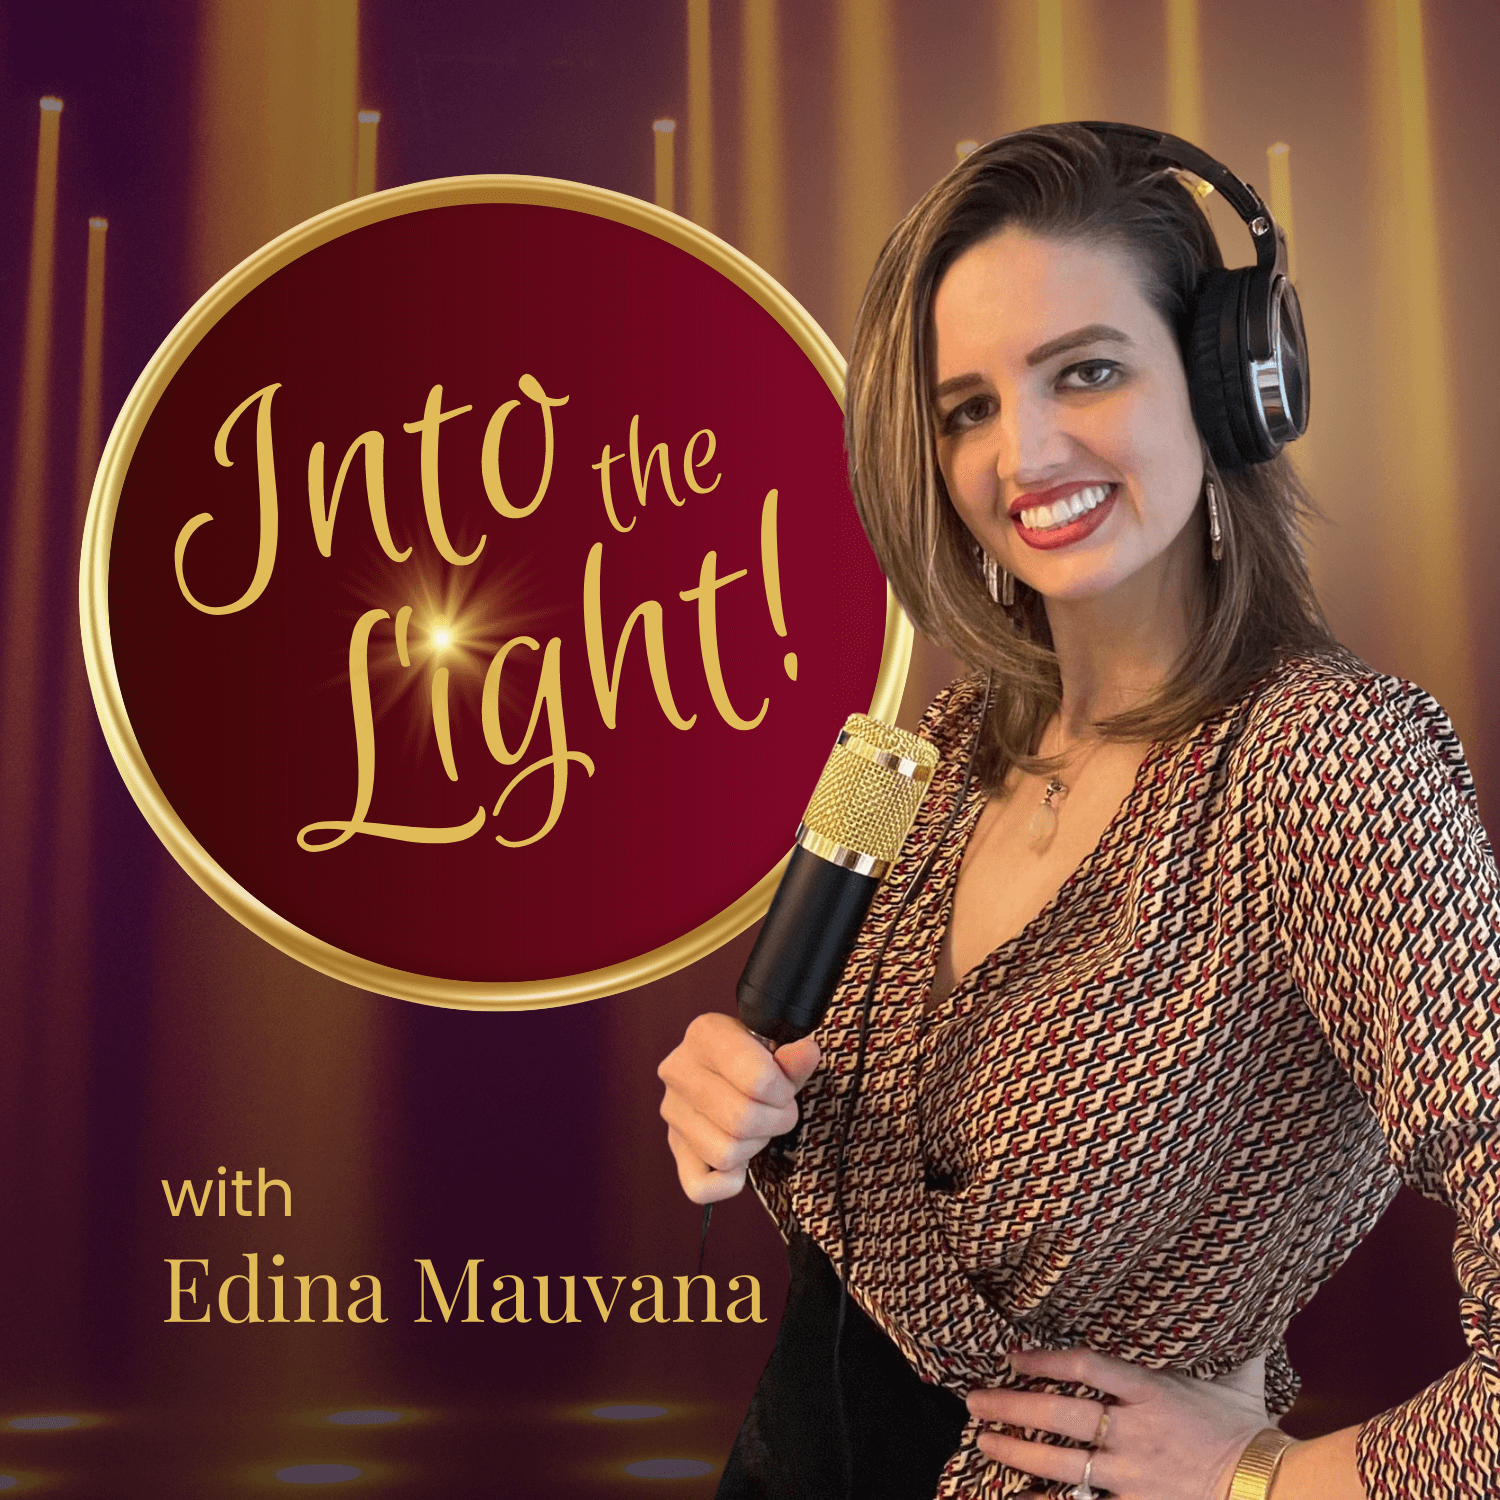 Into the Light! with Edina Mauvana